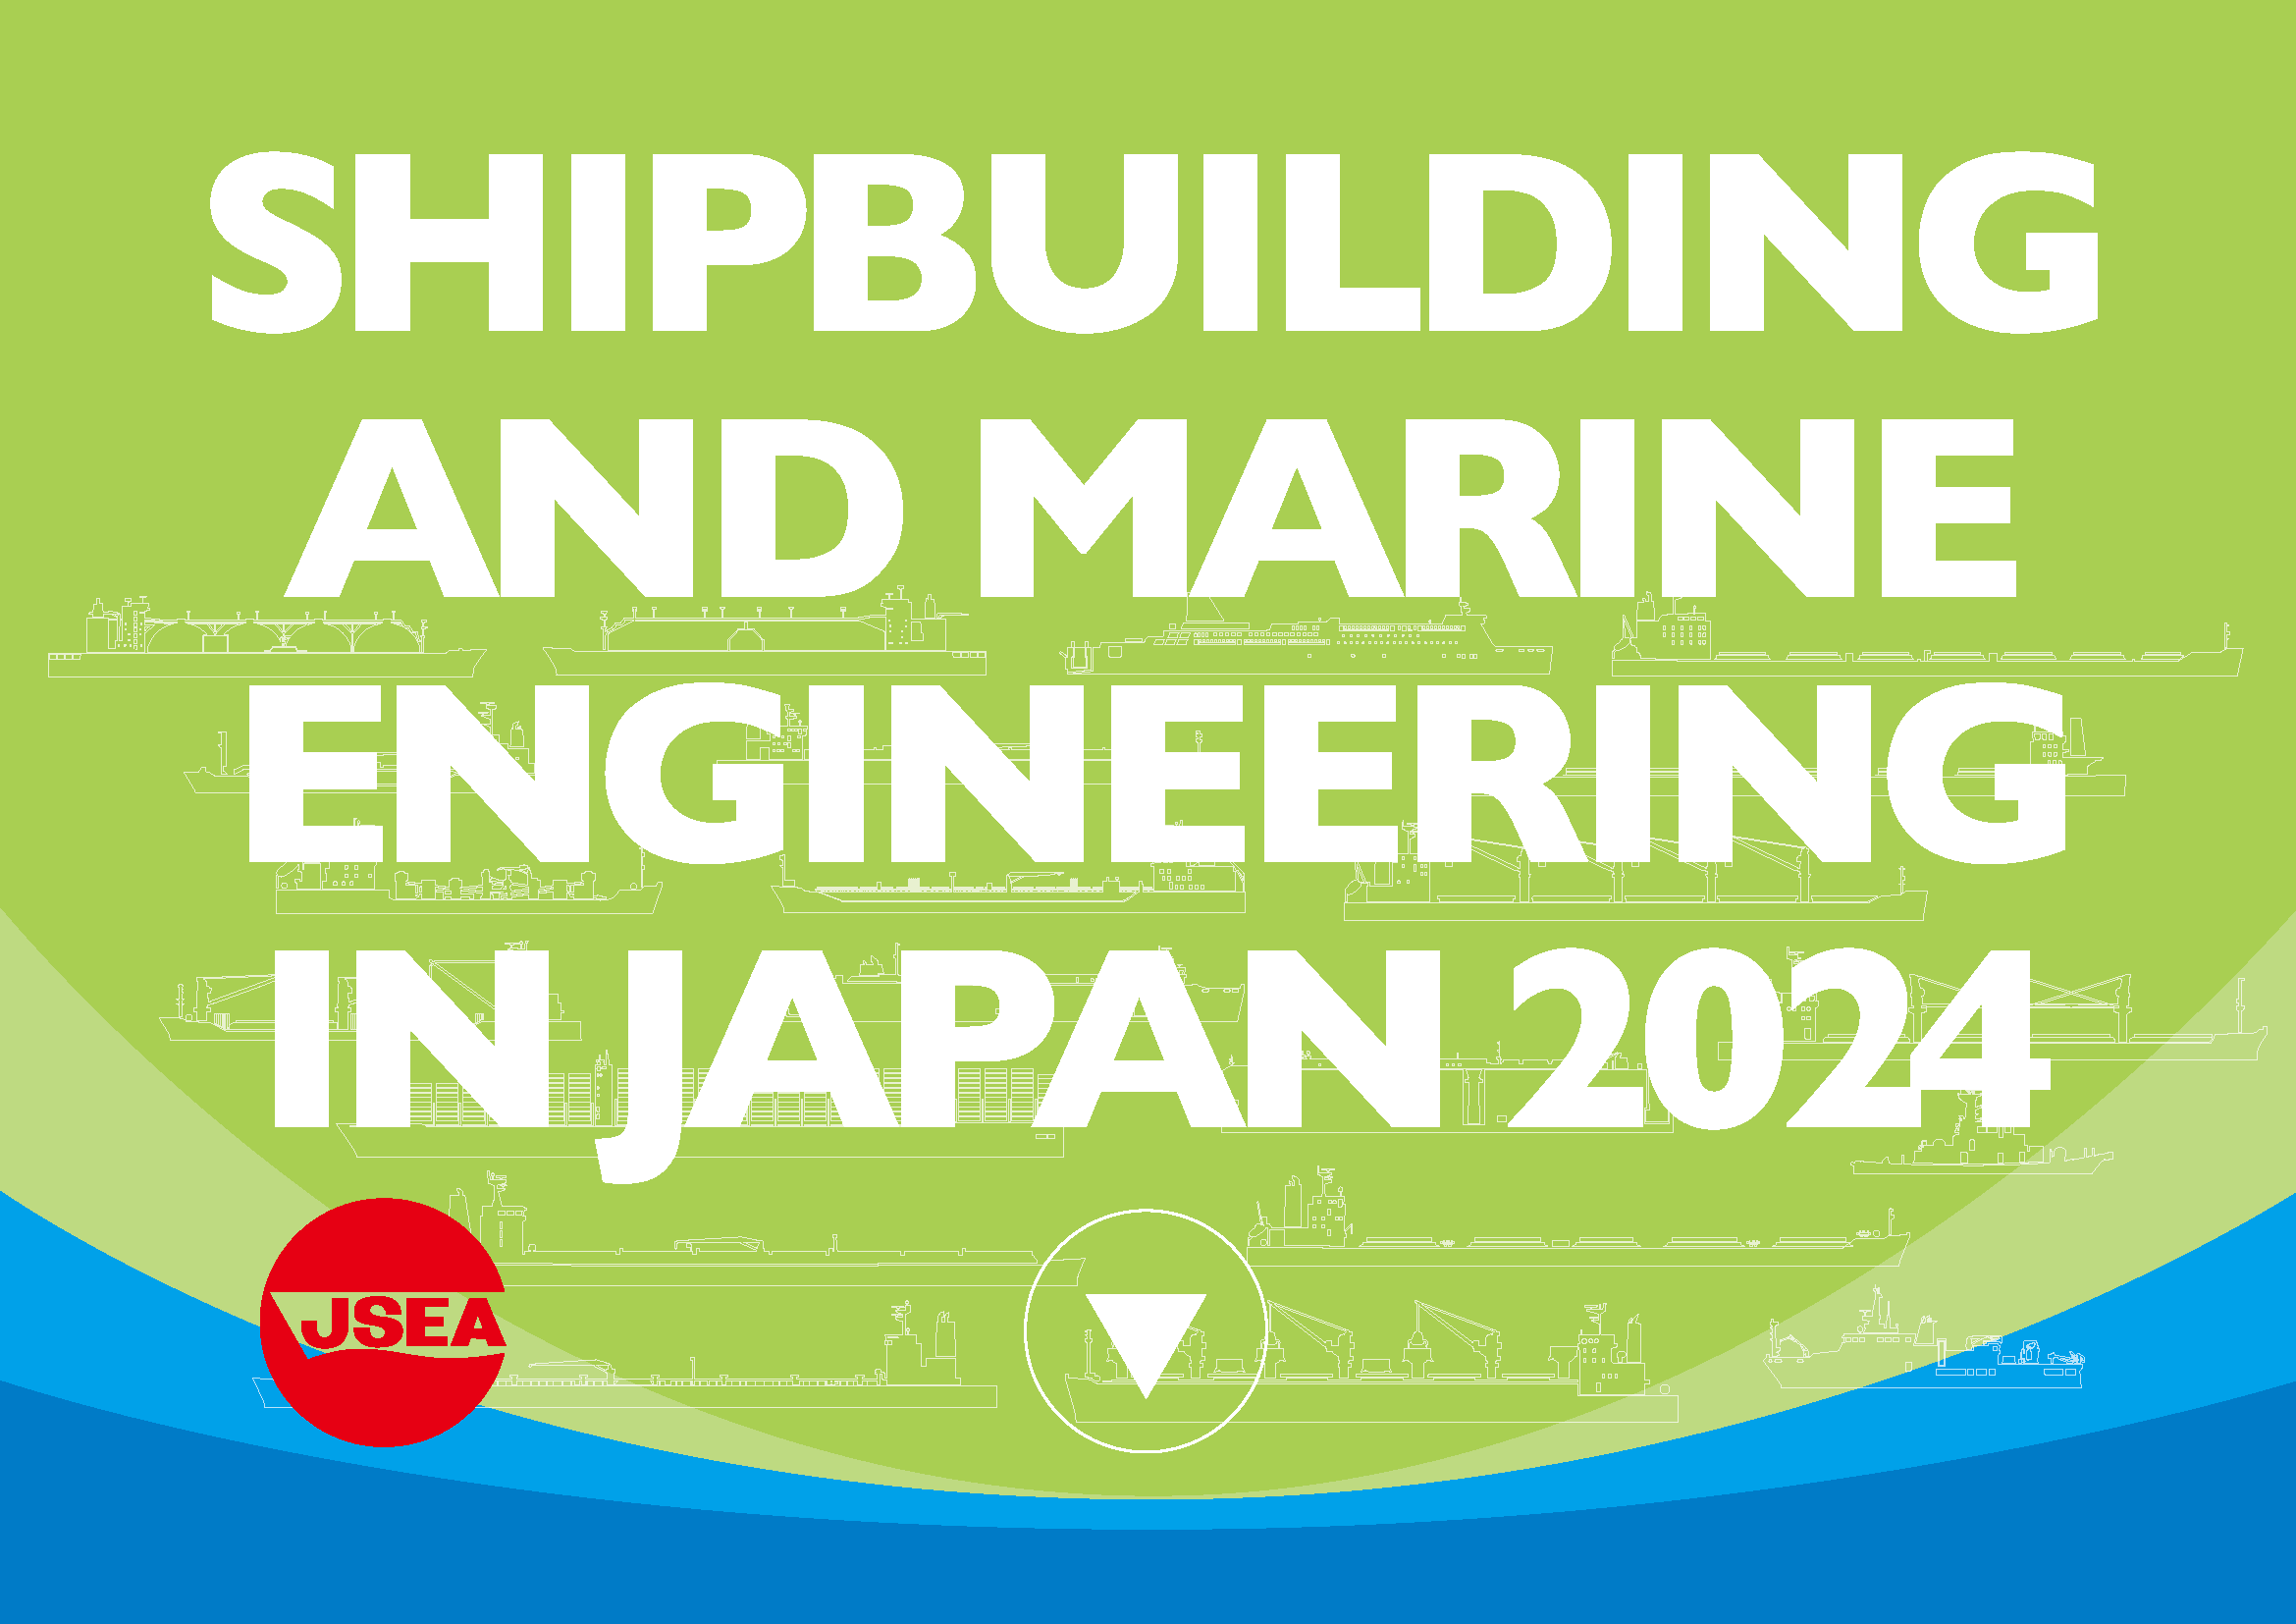 SHIPBUILDING AND MARINE ENGINEERING IN JAPAN 2024